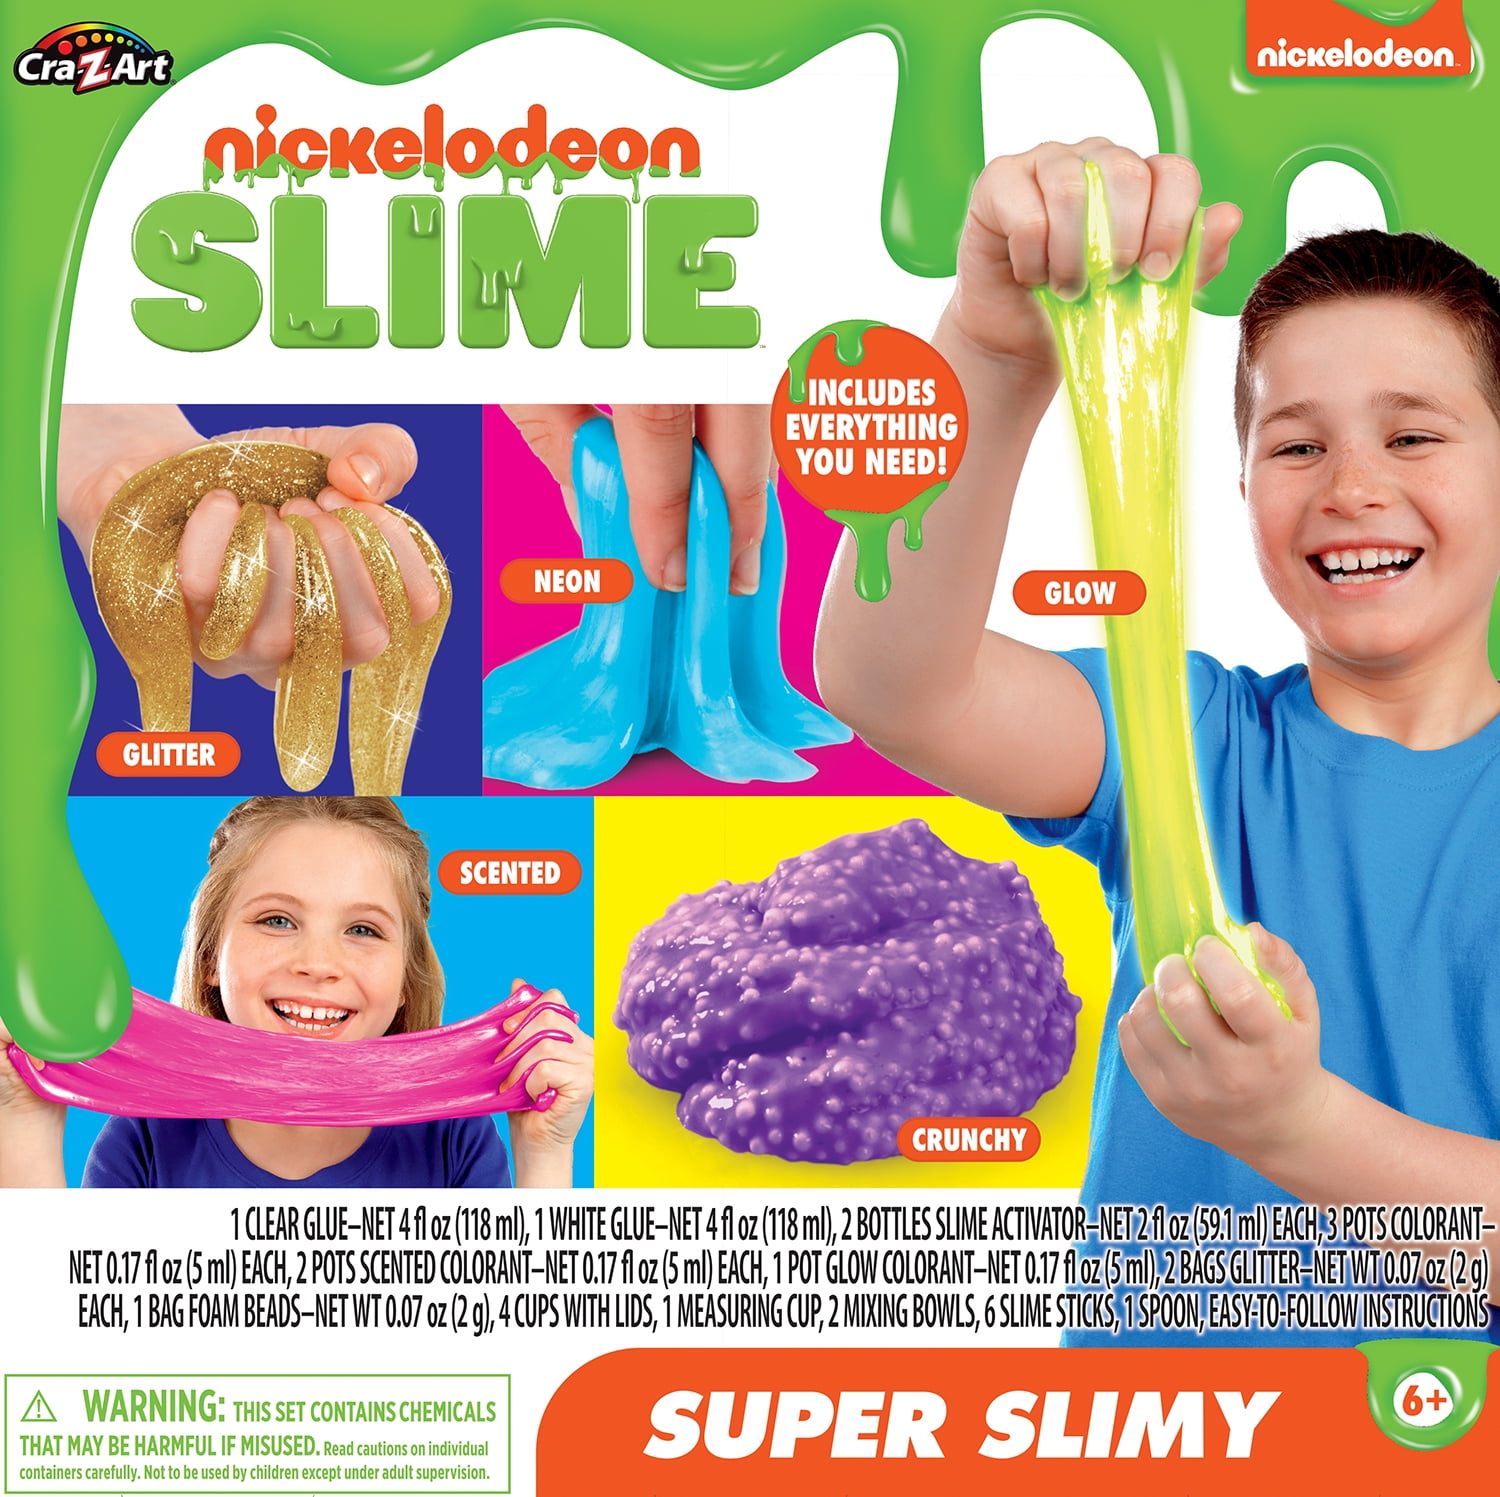 Cra-Z-Art Slime Kit Nickelodeon Galactic Glitter Purple Silver New Sealed 